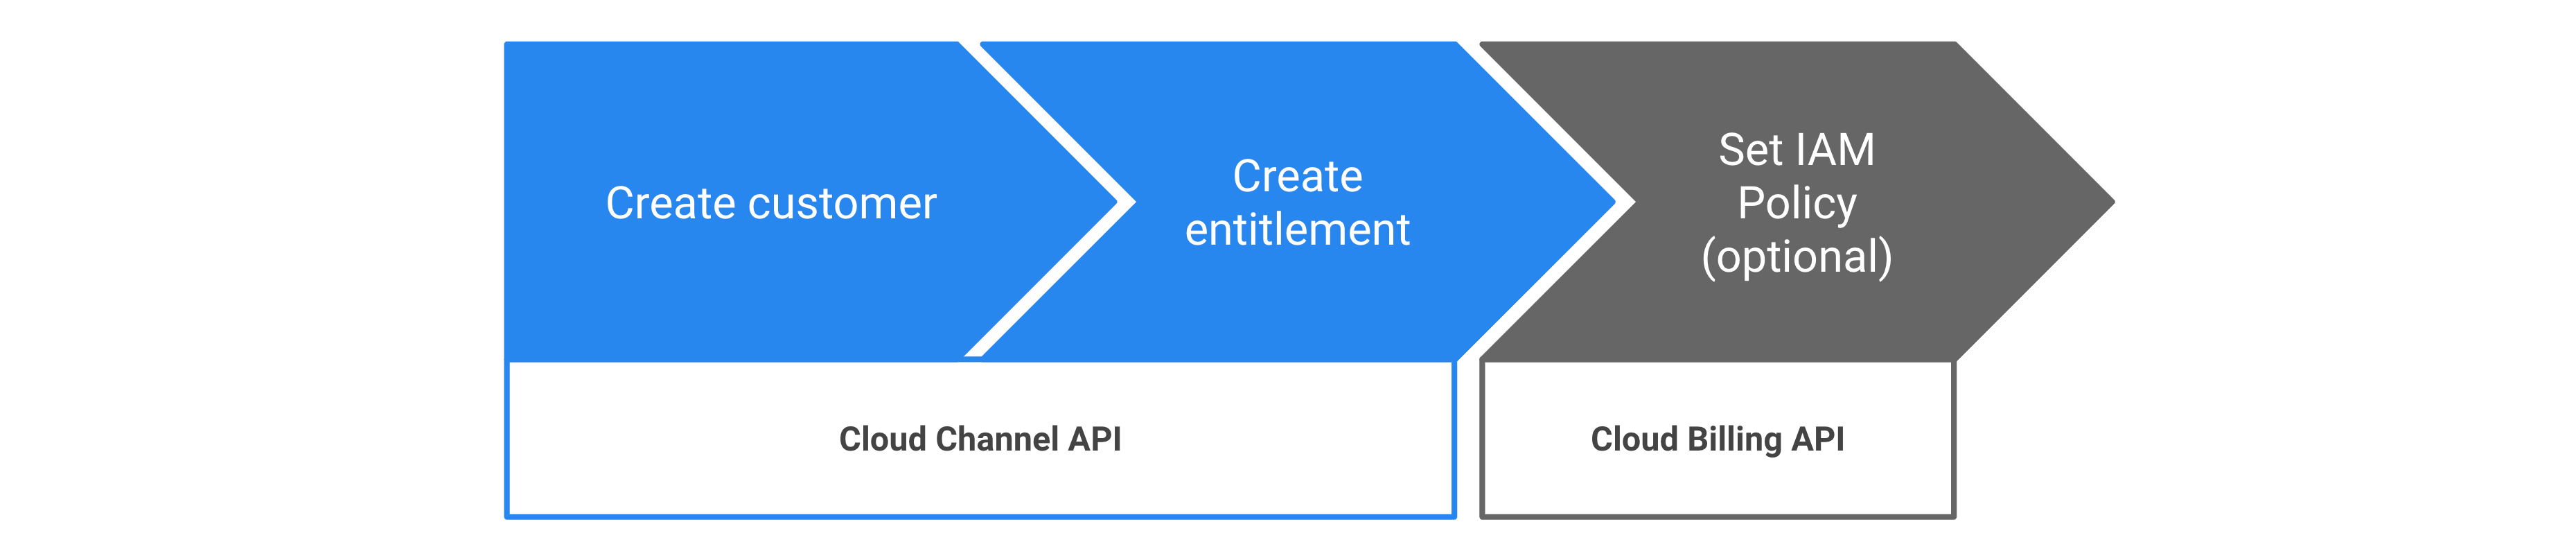 Pasos para aprovisionar los derechos de Google Cloud a través de la API de Cloud Channel